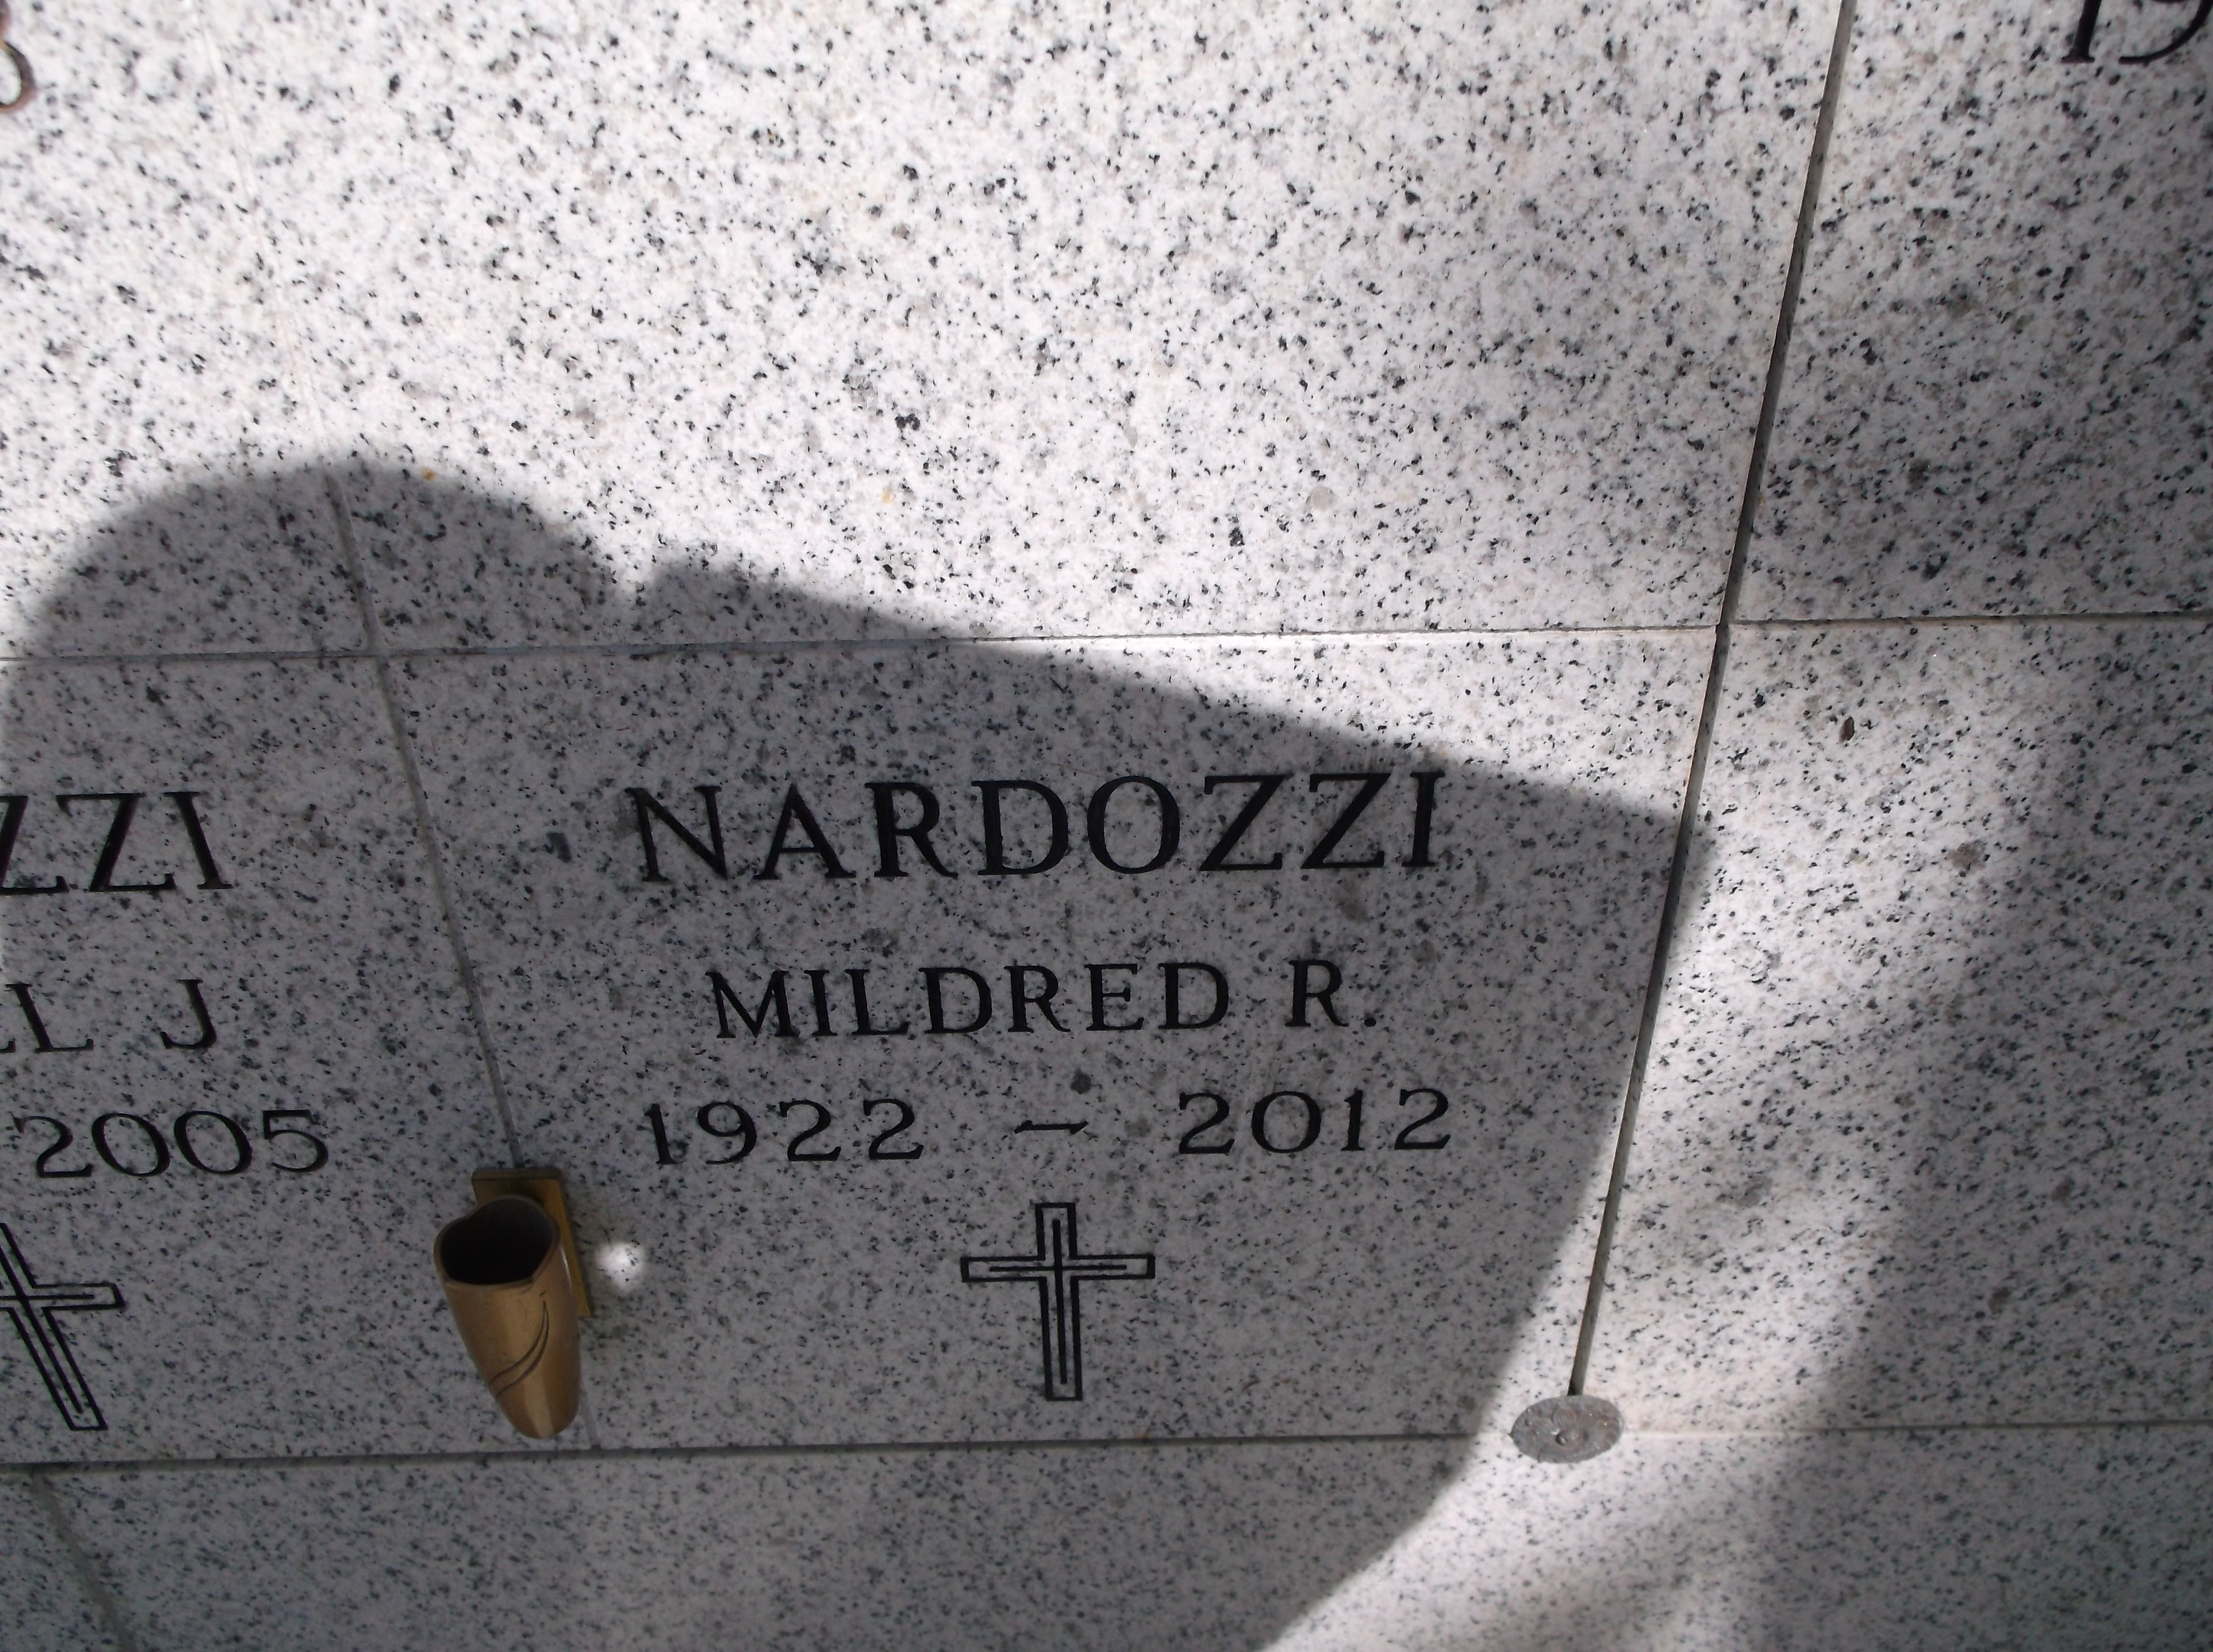 Mildred R Nardozzi